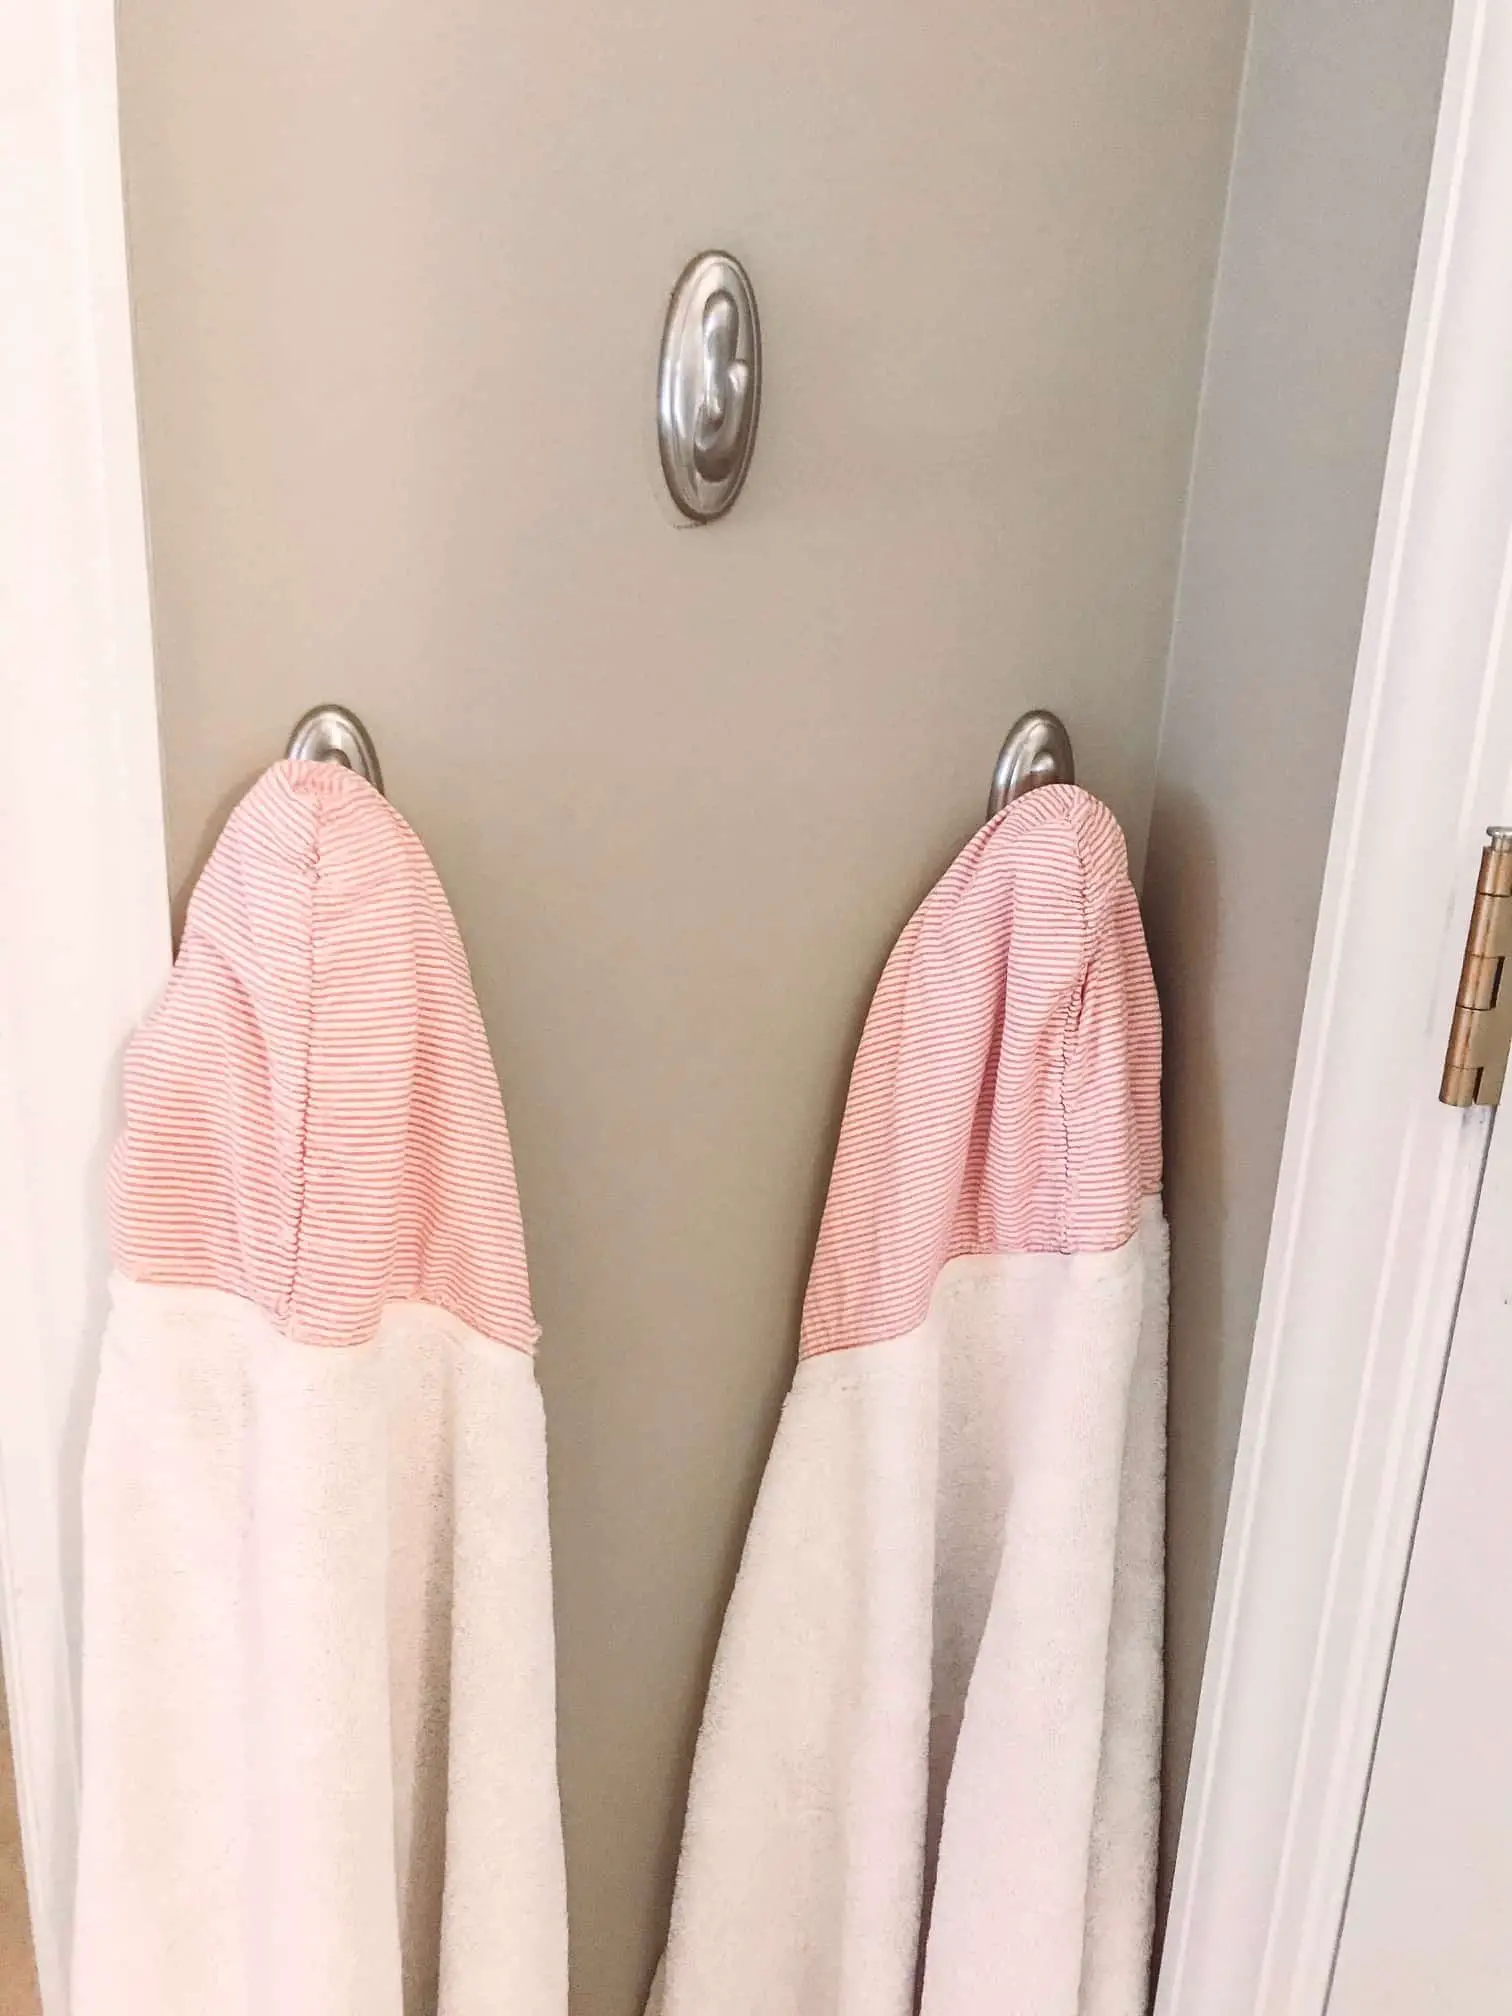 Bathroom Storage Hacks to help make your mornings easier. Hanging extra towel hooks.